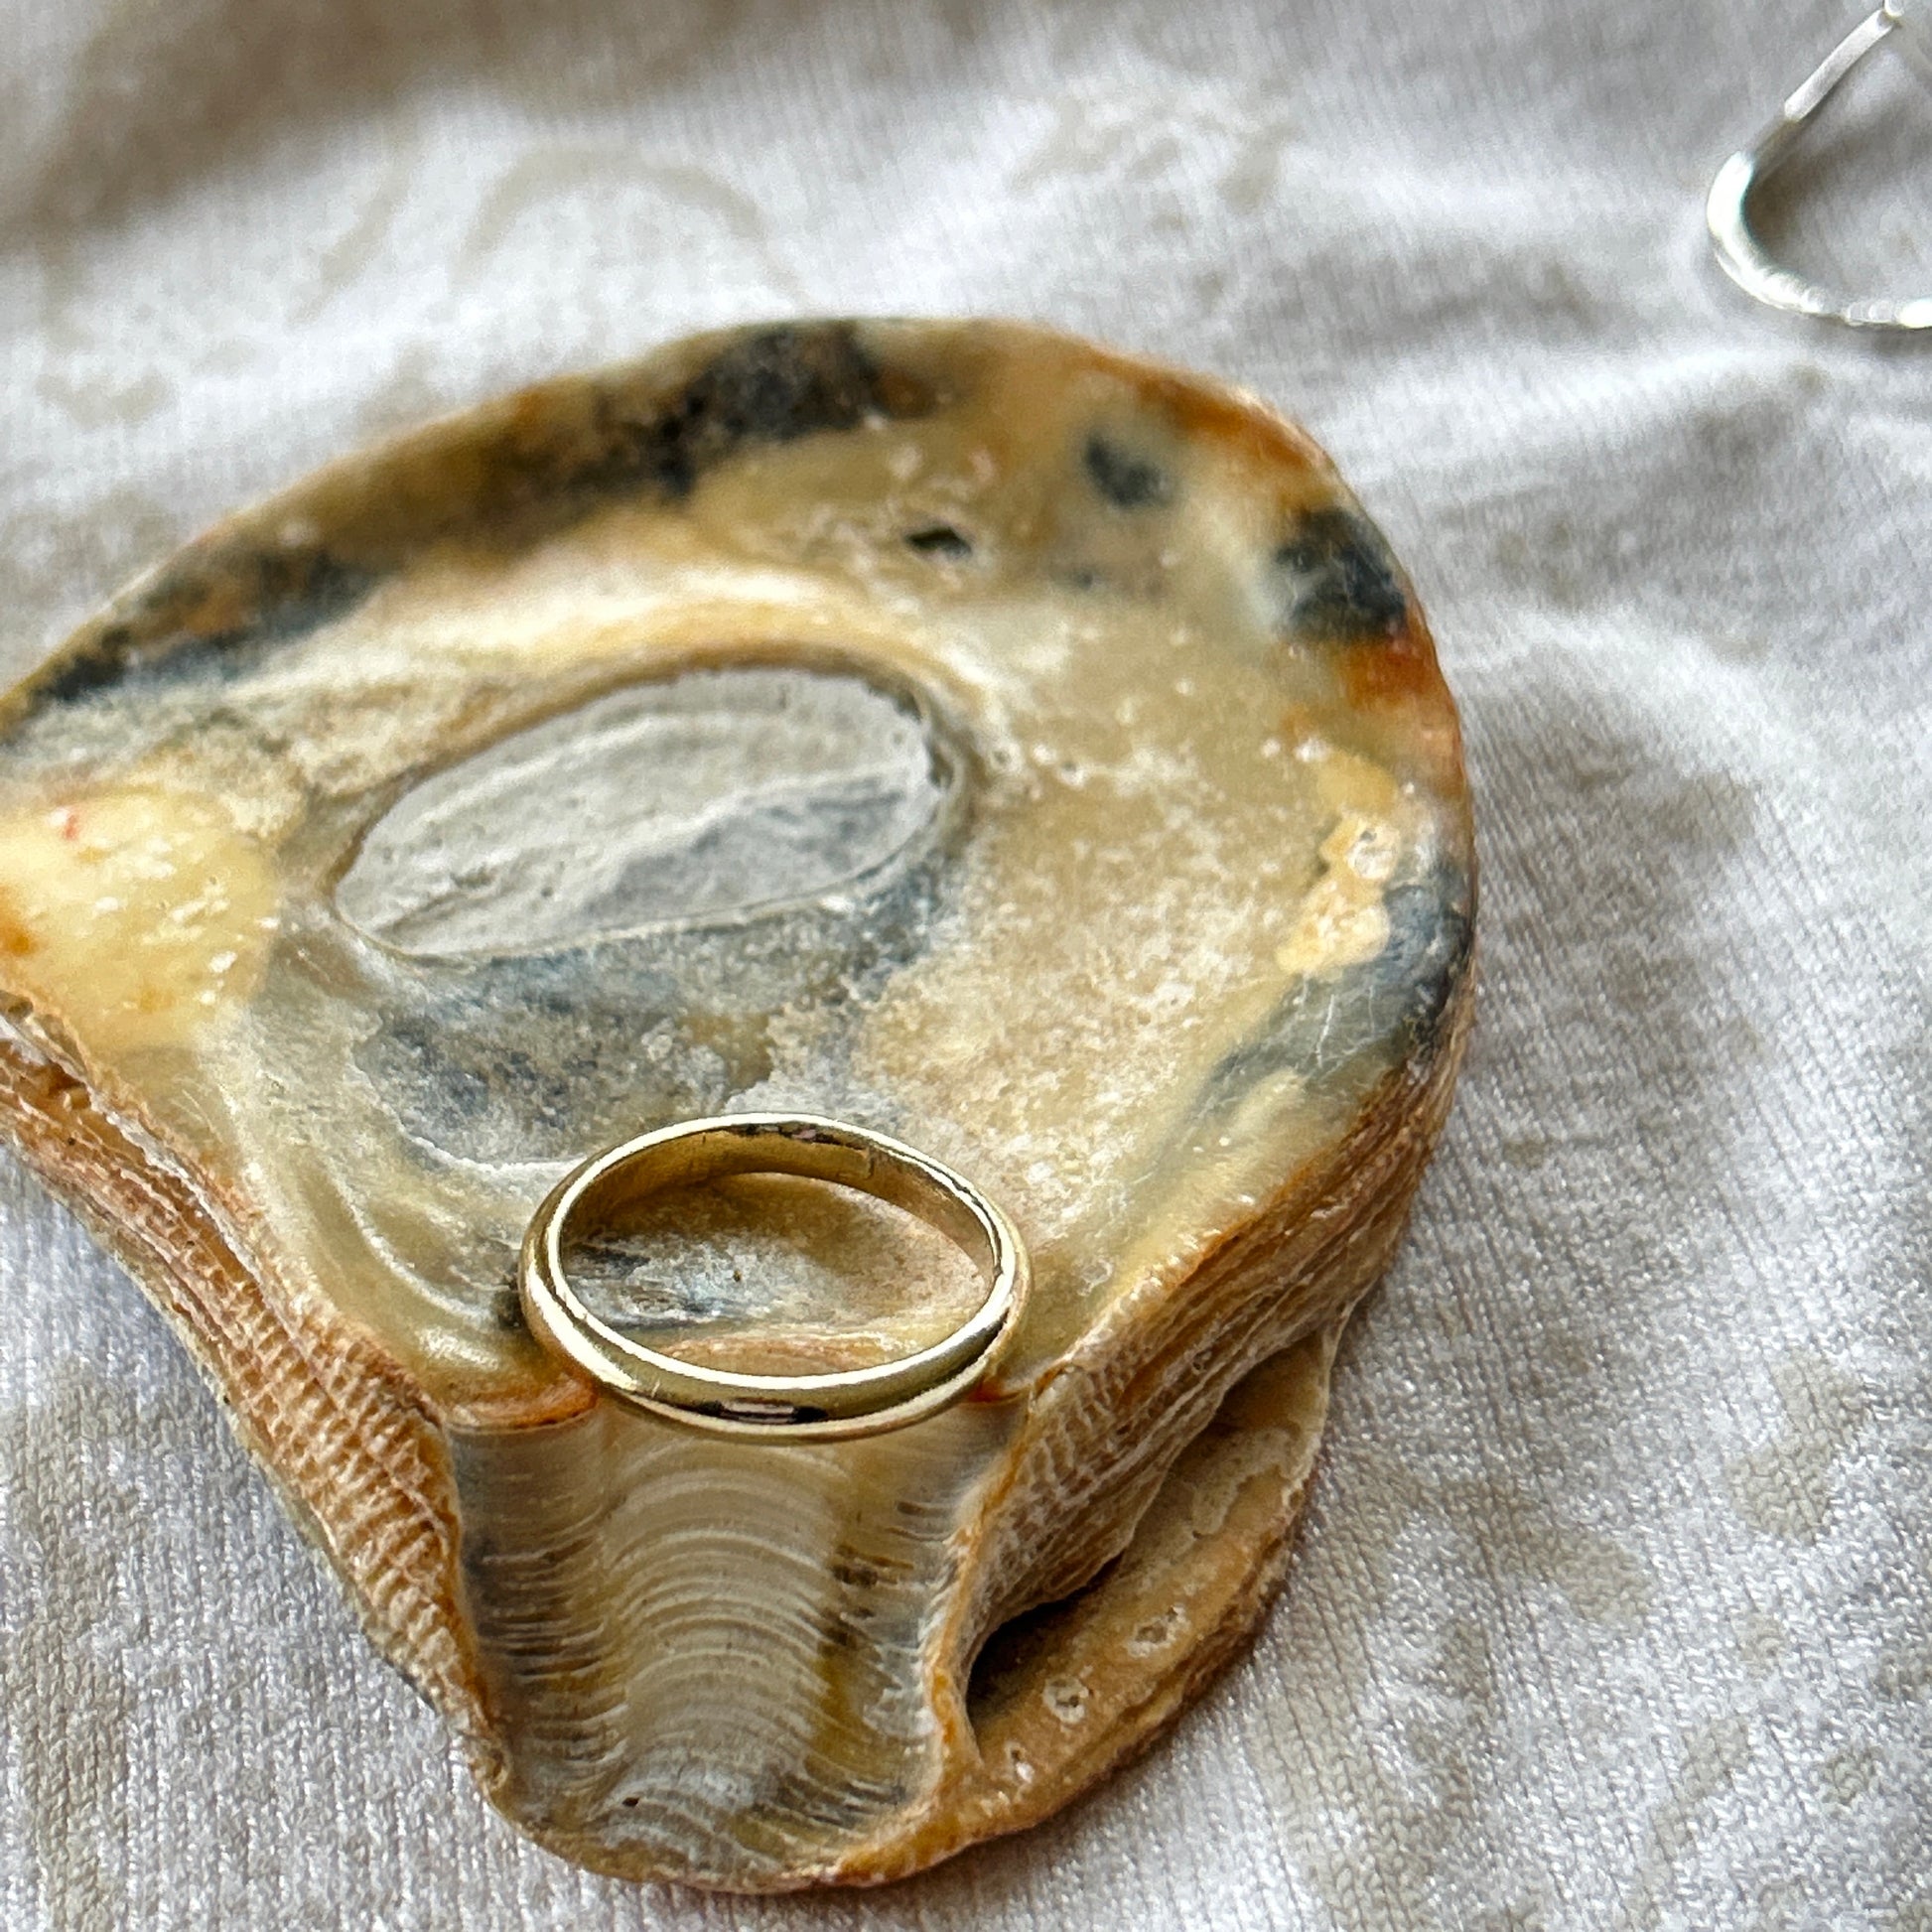 Gold Wedding Ring - Love Beach Beads